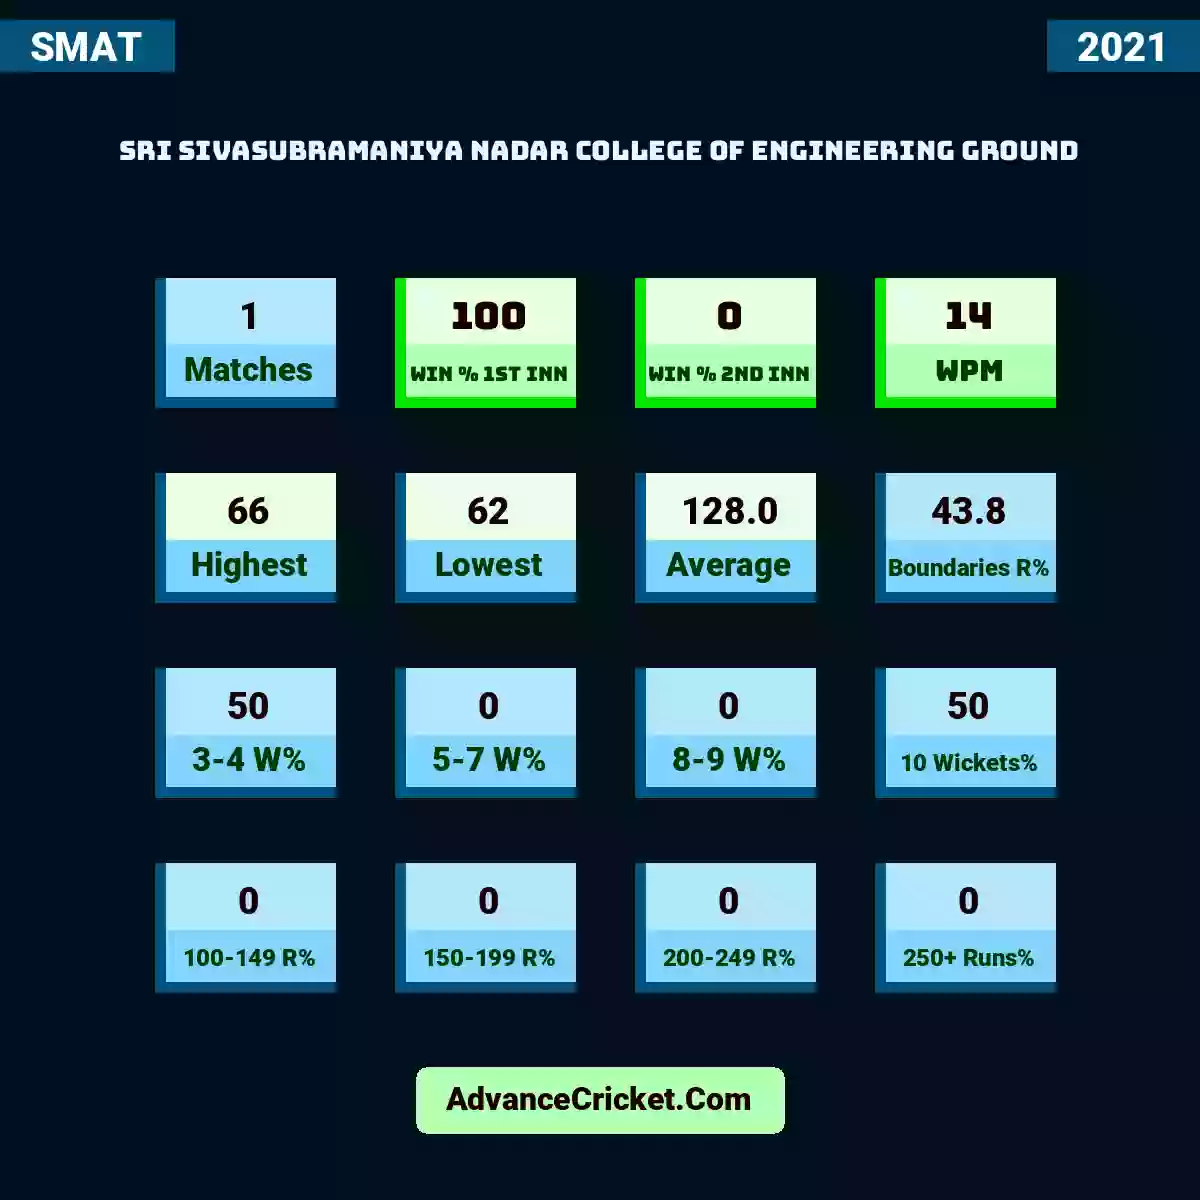 Image showing Sri Sivasubramaniya Nadar College of Engineering Ground with Matches: 1, Win % 1st Inn: 100, Win % 2nd Inn: 0, WPM: 14, Highest: 66, Lowest: 62, Average: 128.0, Boundaries R%: 43.8, 3-4 W%: 50, 5-7 W%: 0, 8-9 W%: 0, 10 Wickets%: 50, 100-149 R%: 0, 150-199 R%: 0, 200-249 R%: 0, 250+ Run